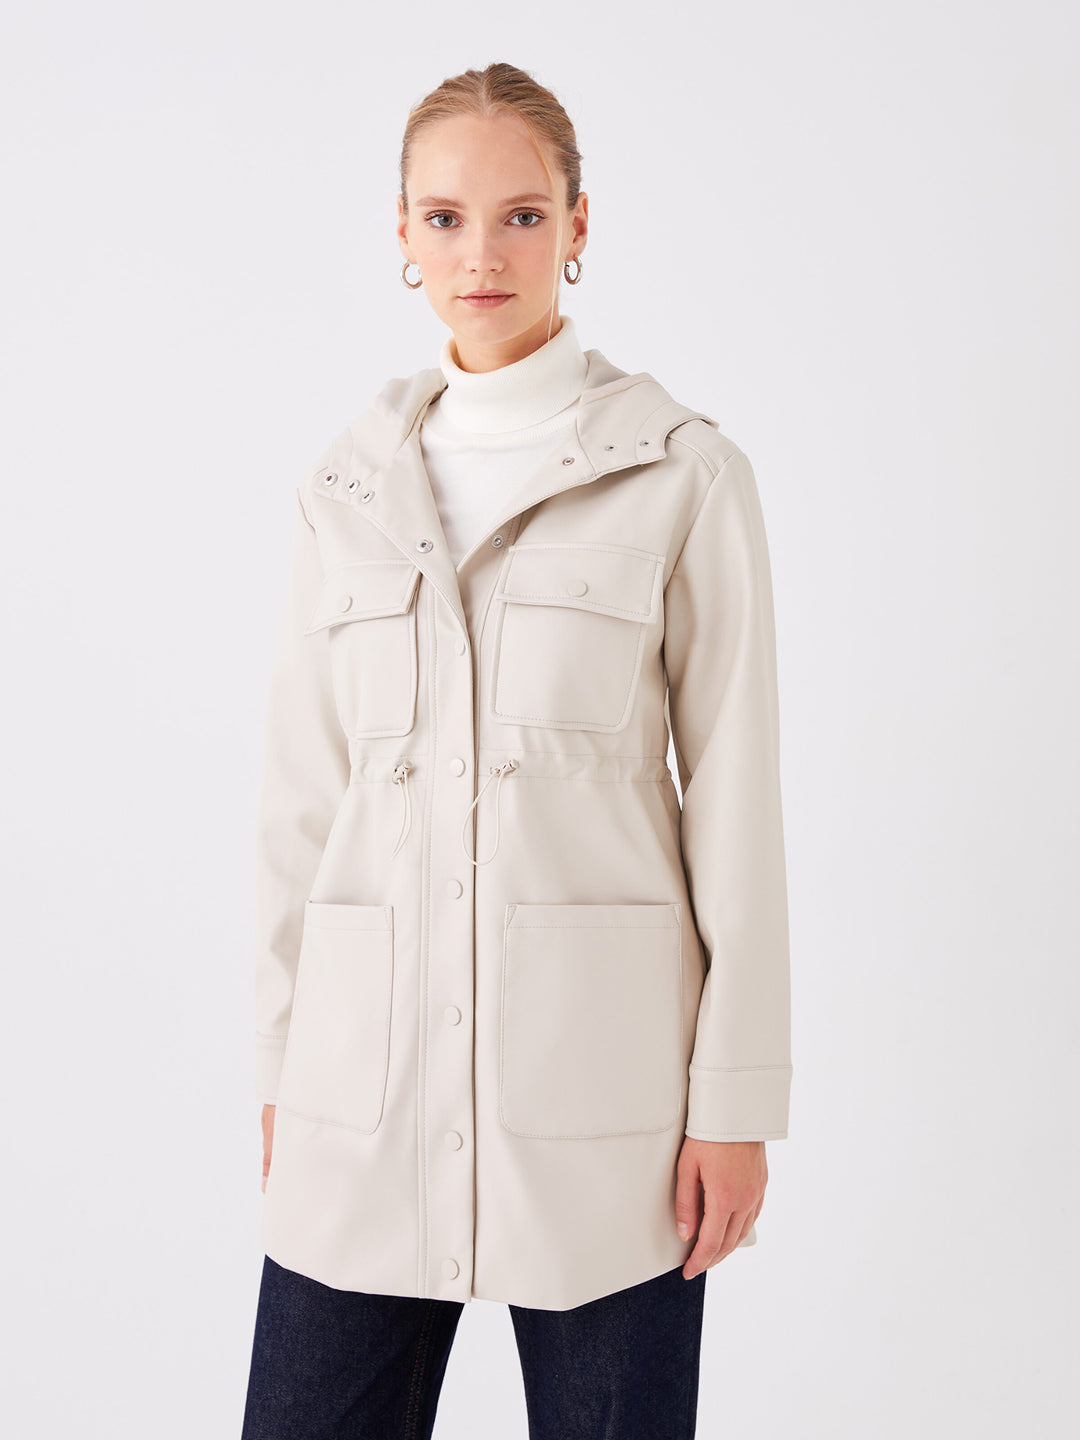 Lcw Modest Women Hooded Plain Leather Look Raincoat